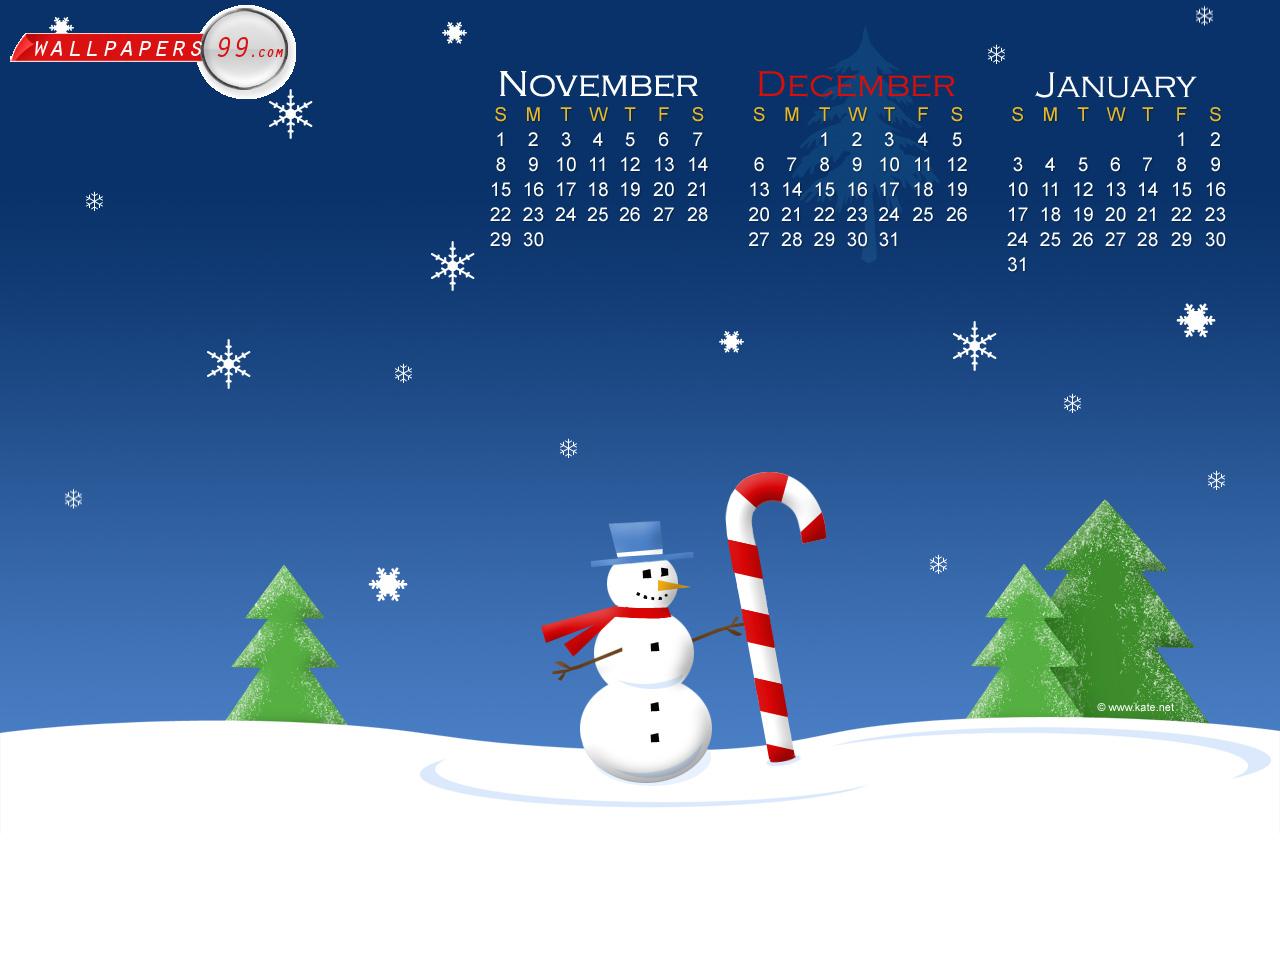 Christmas Snow Wallpaper HD In Celebrations Imageci